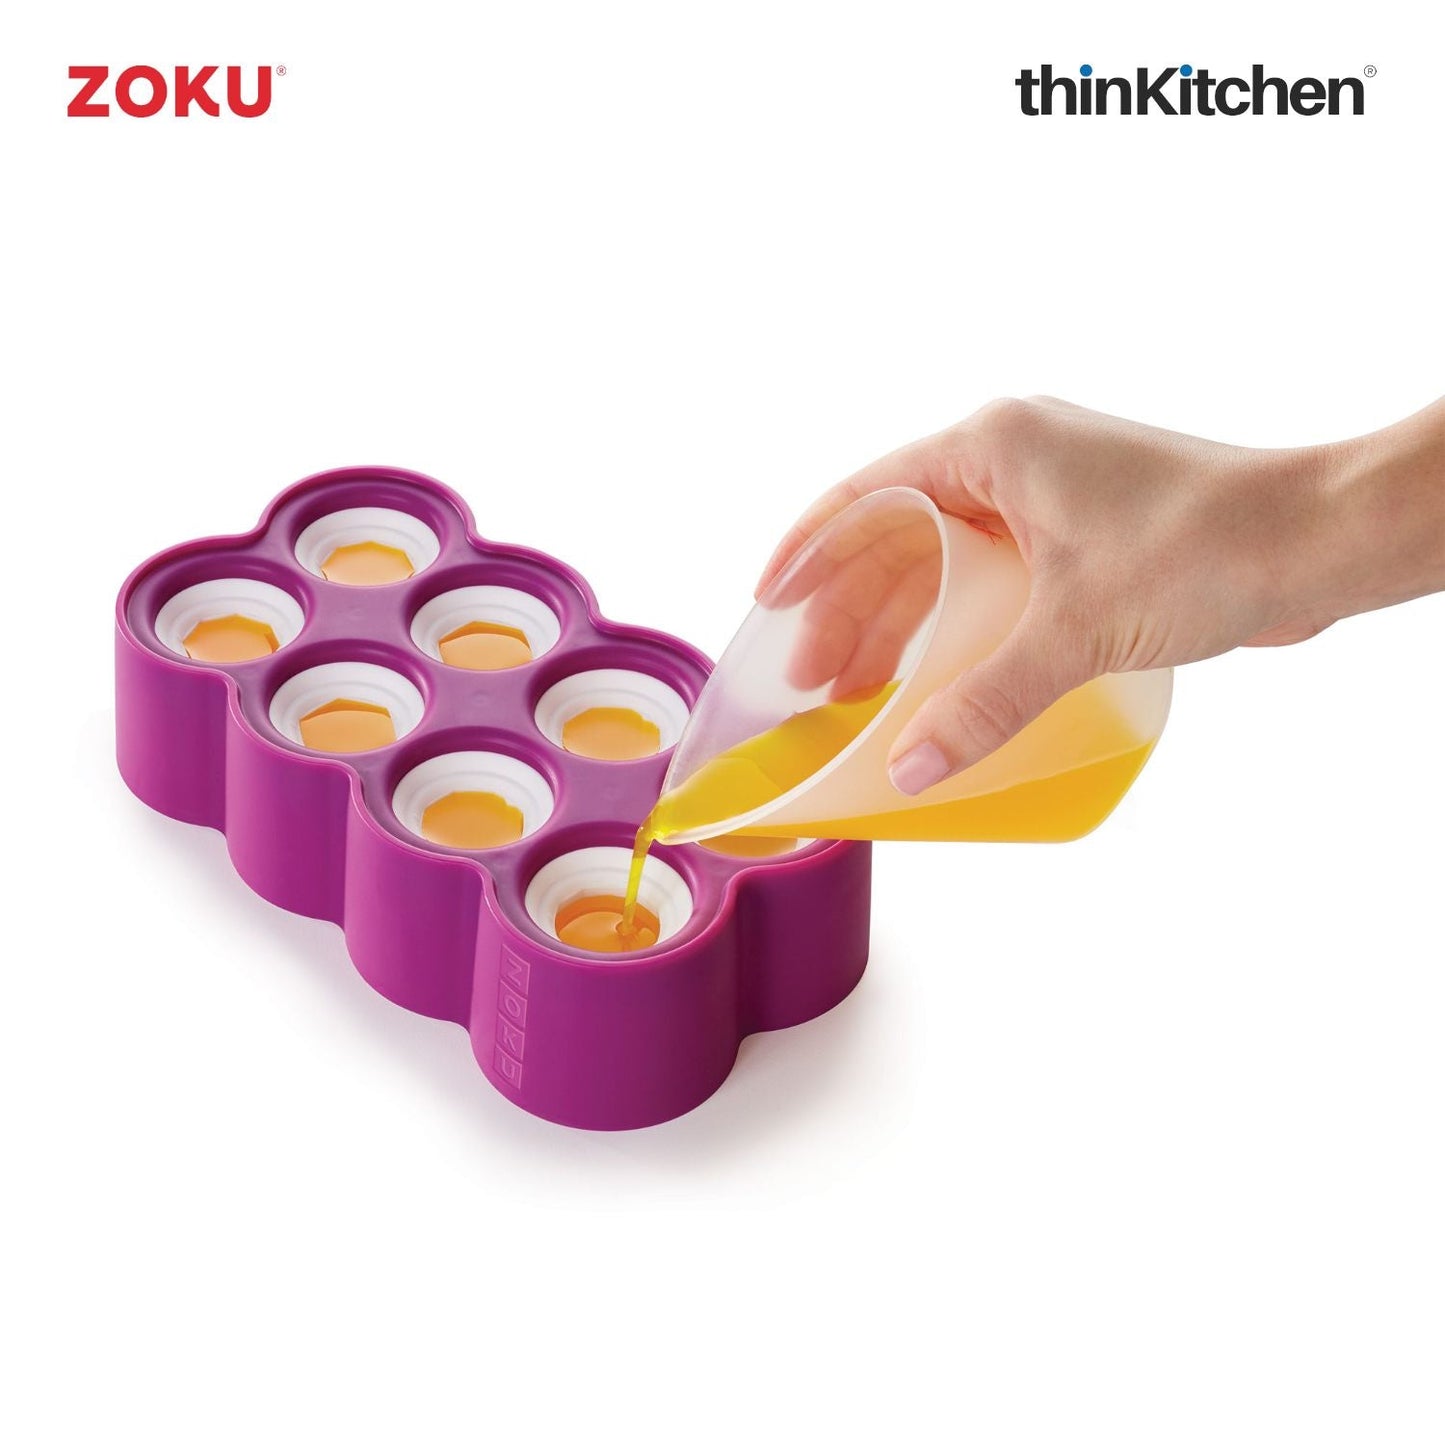 thinKitchen™ Zoku Ring Pop Mold